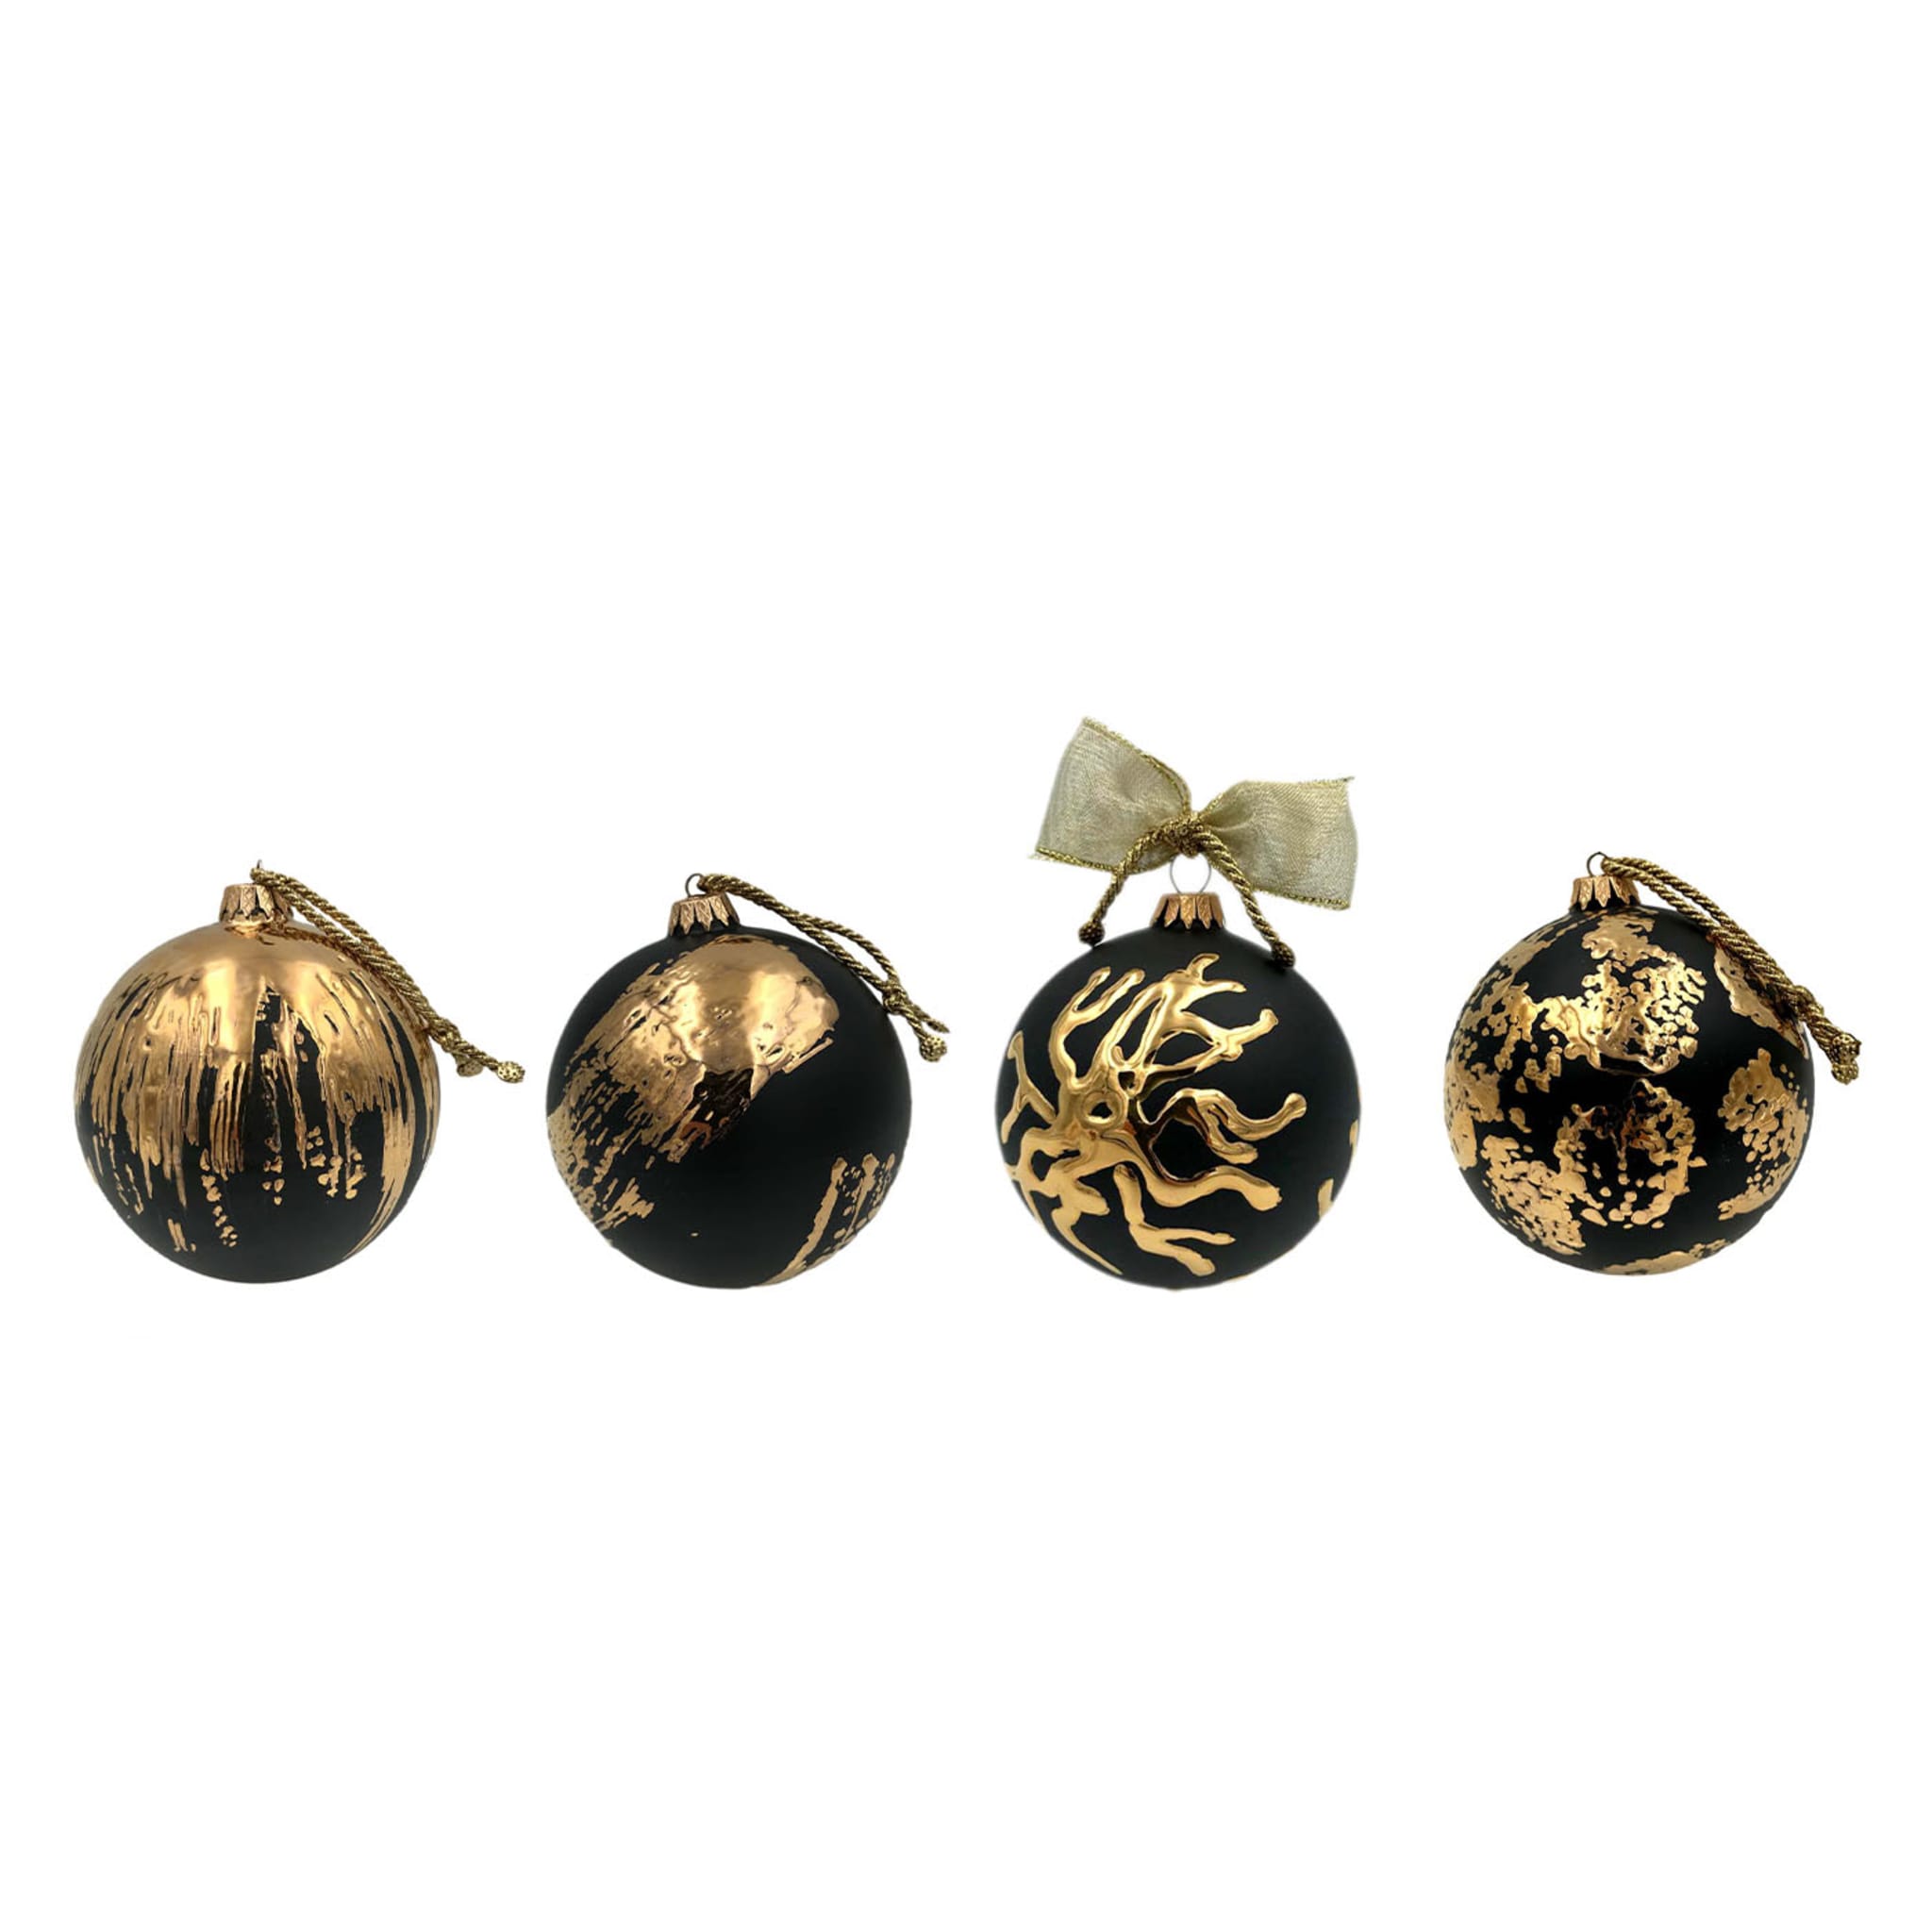 Foglie Ceramic Christmas Ornament Black and Gold - Alternative view 1